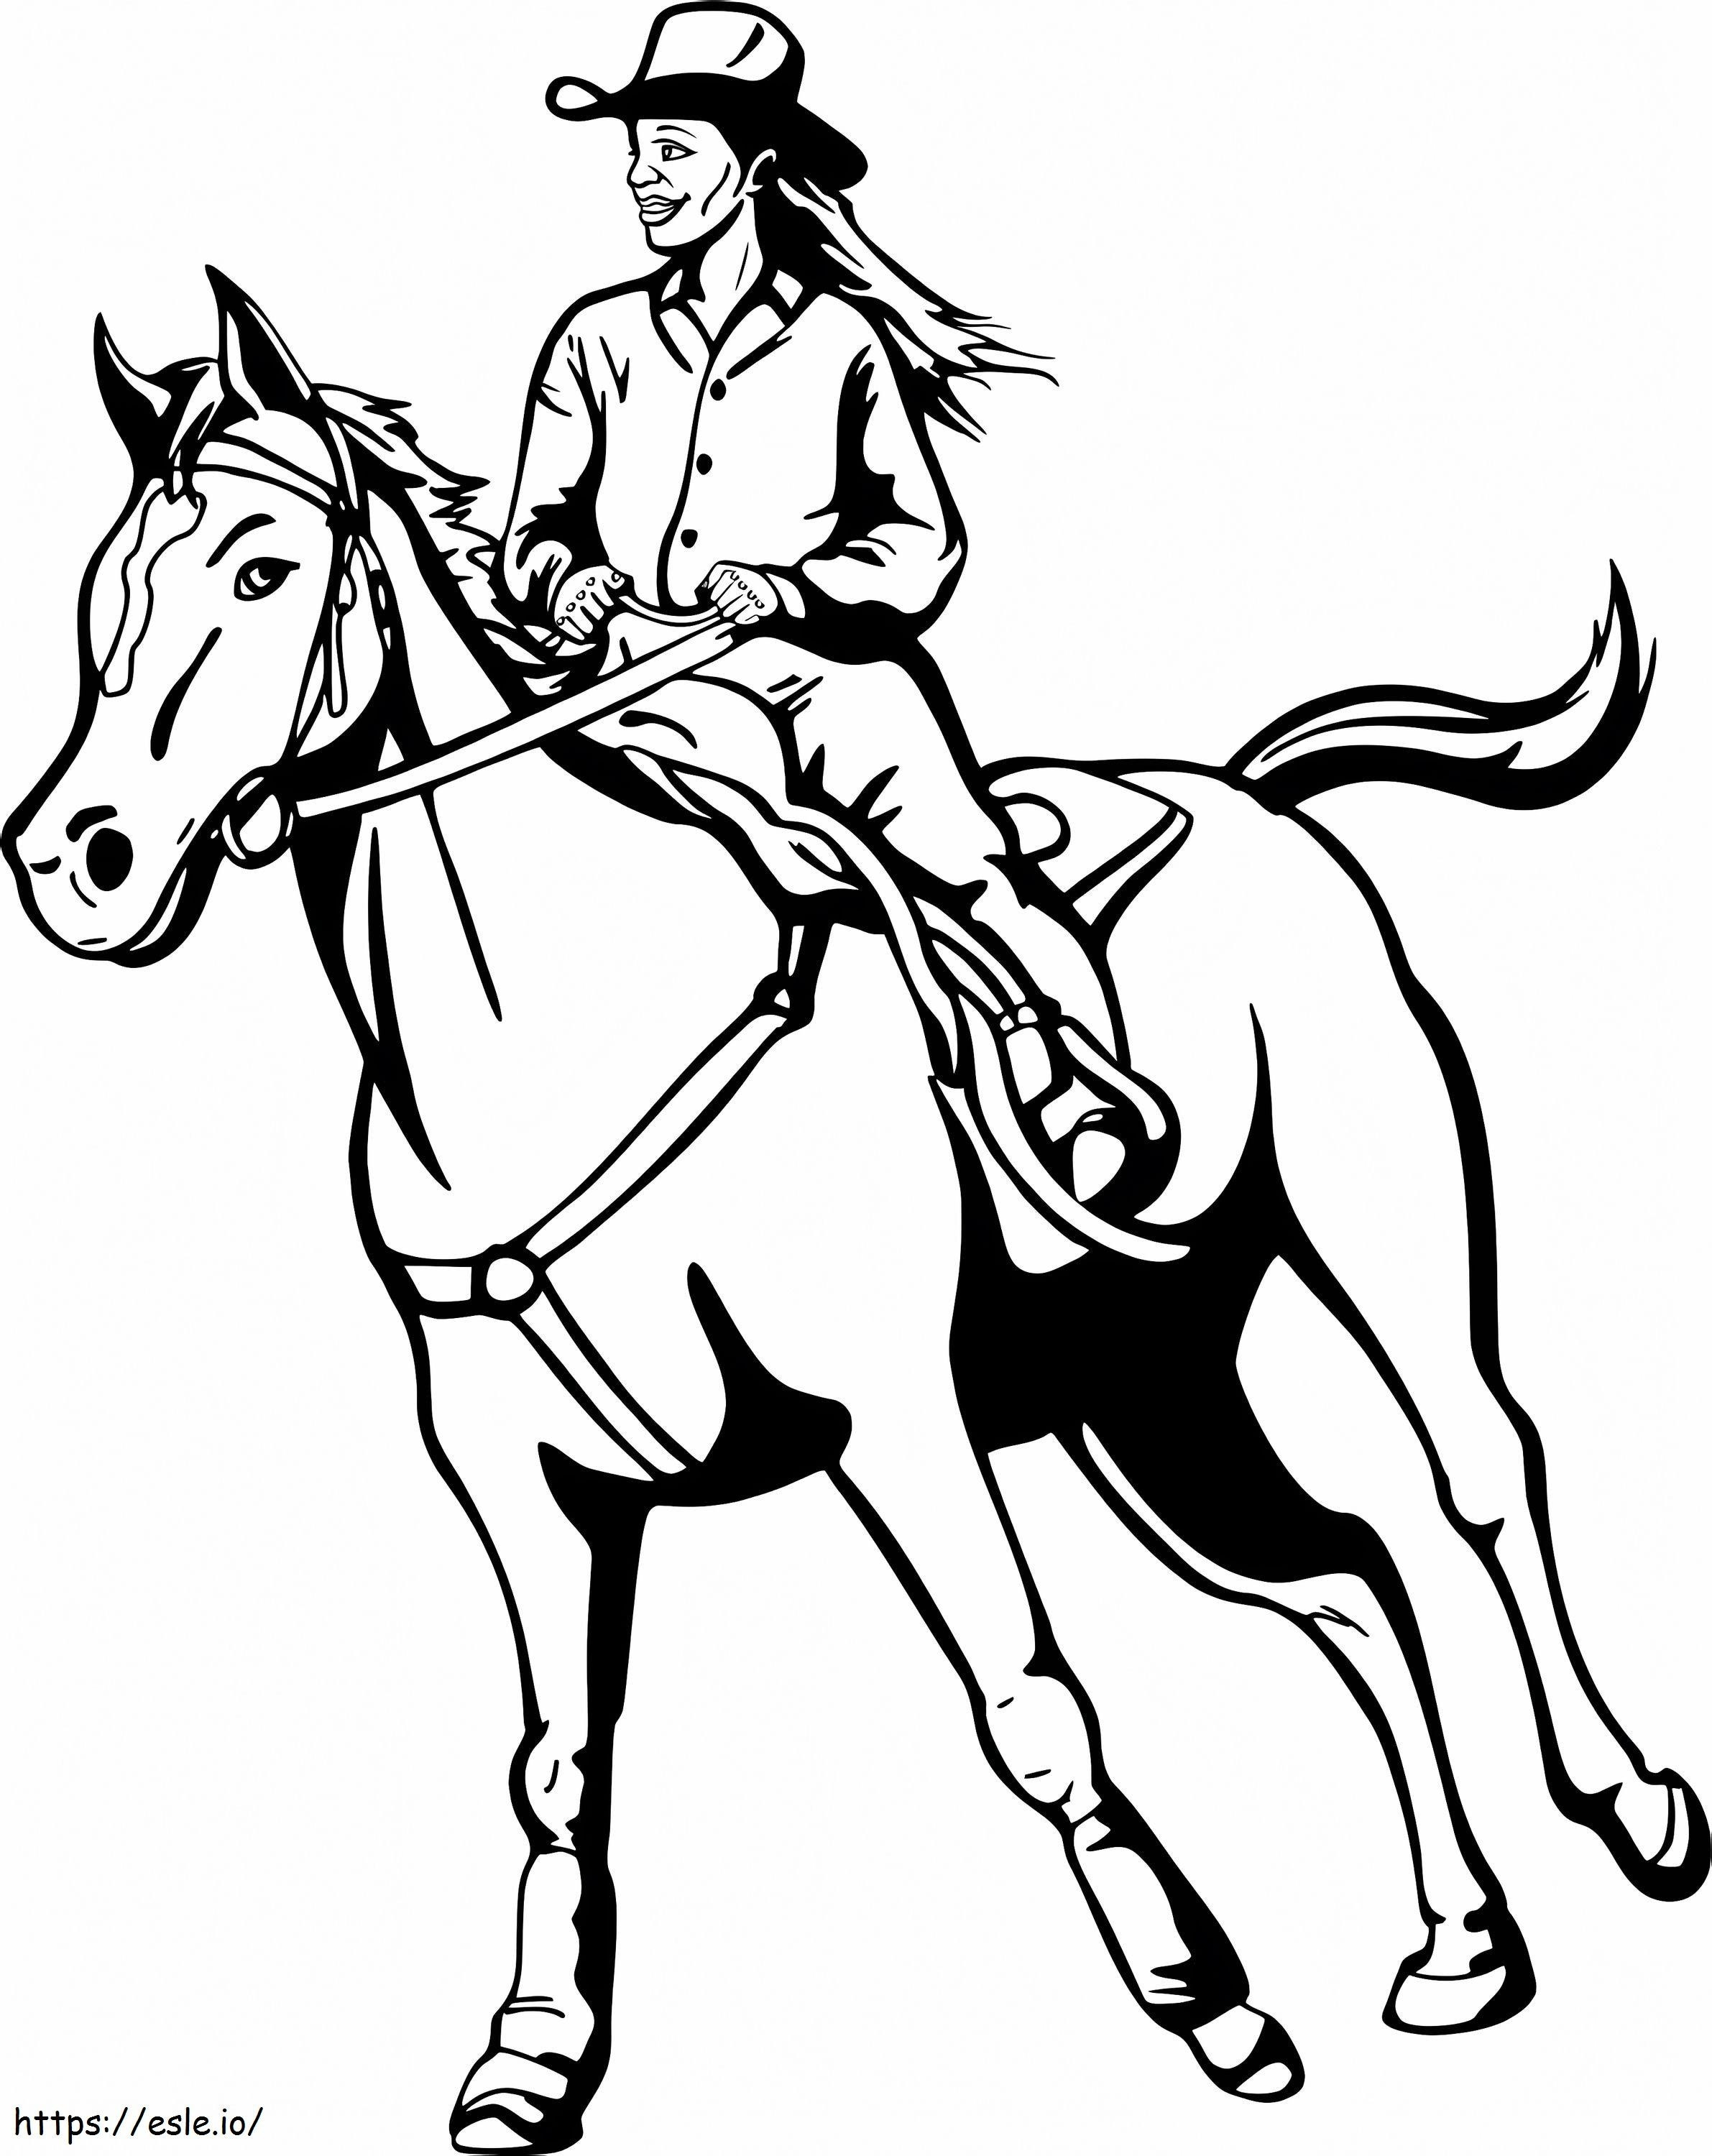 Cowgirl andando a cavalo para colorir